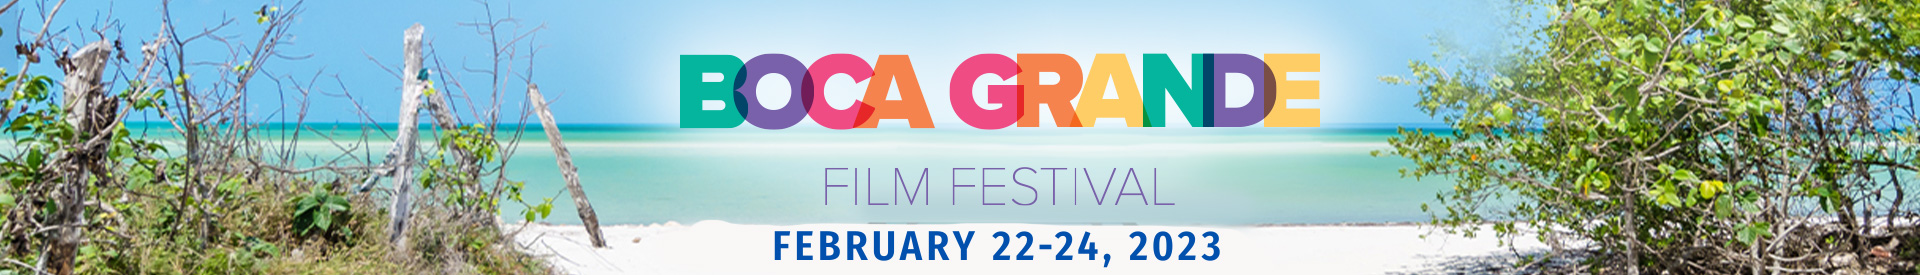 Boca Grande Film Festival 2023